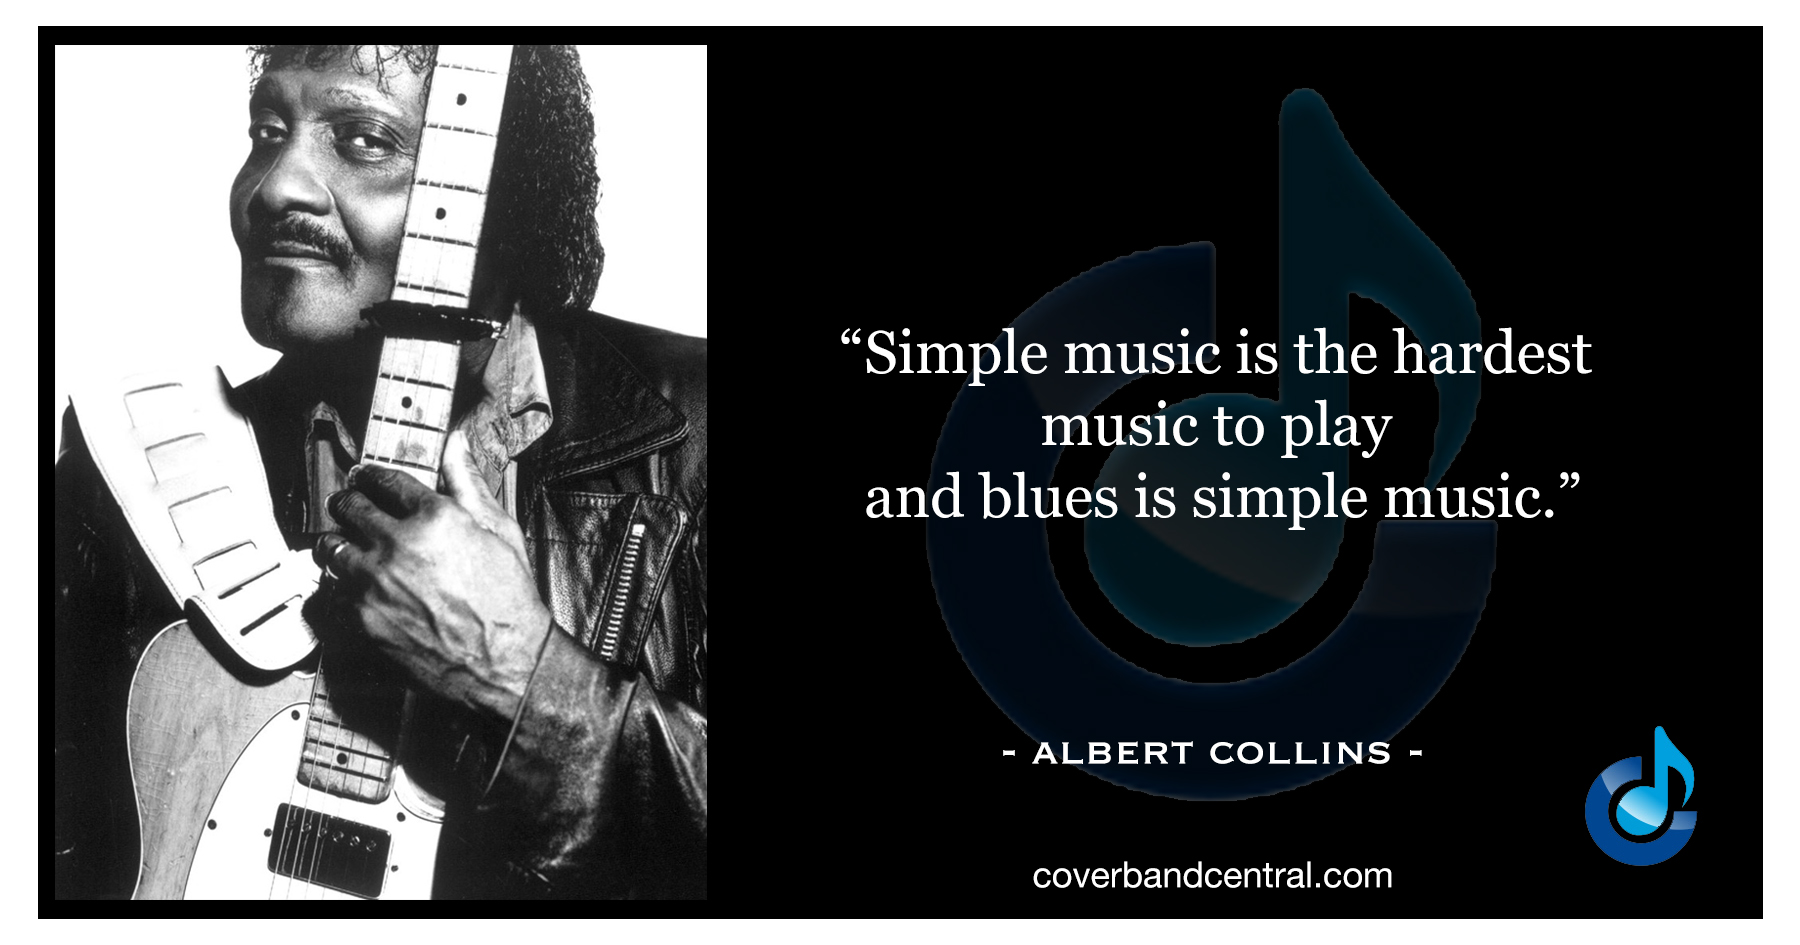 Albert Collins quote